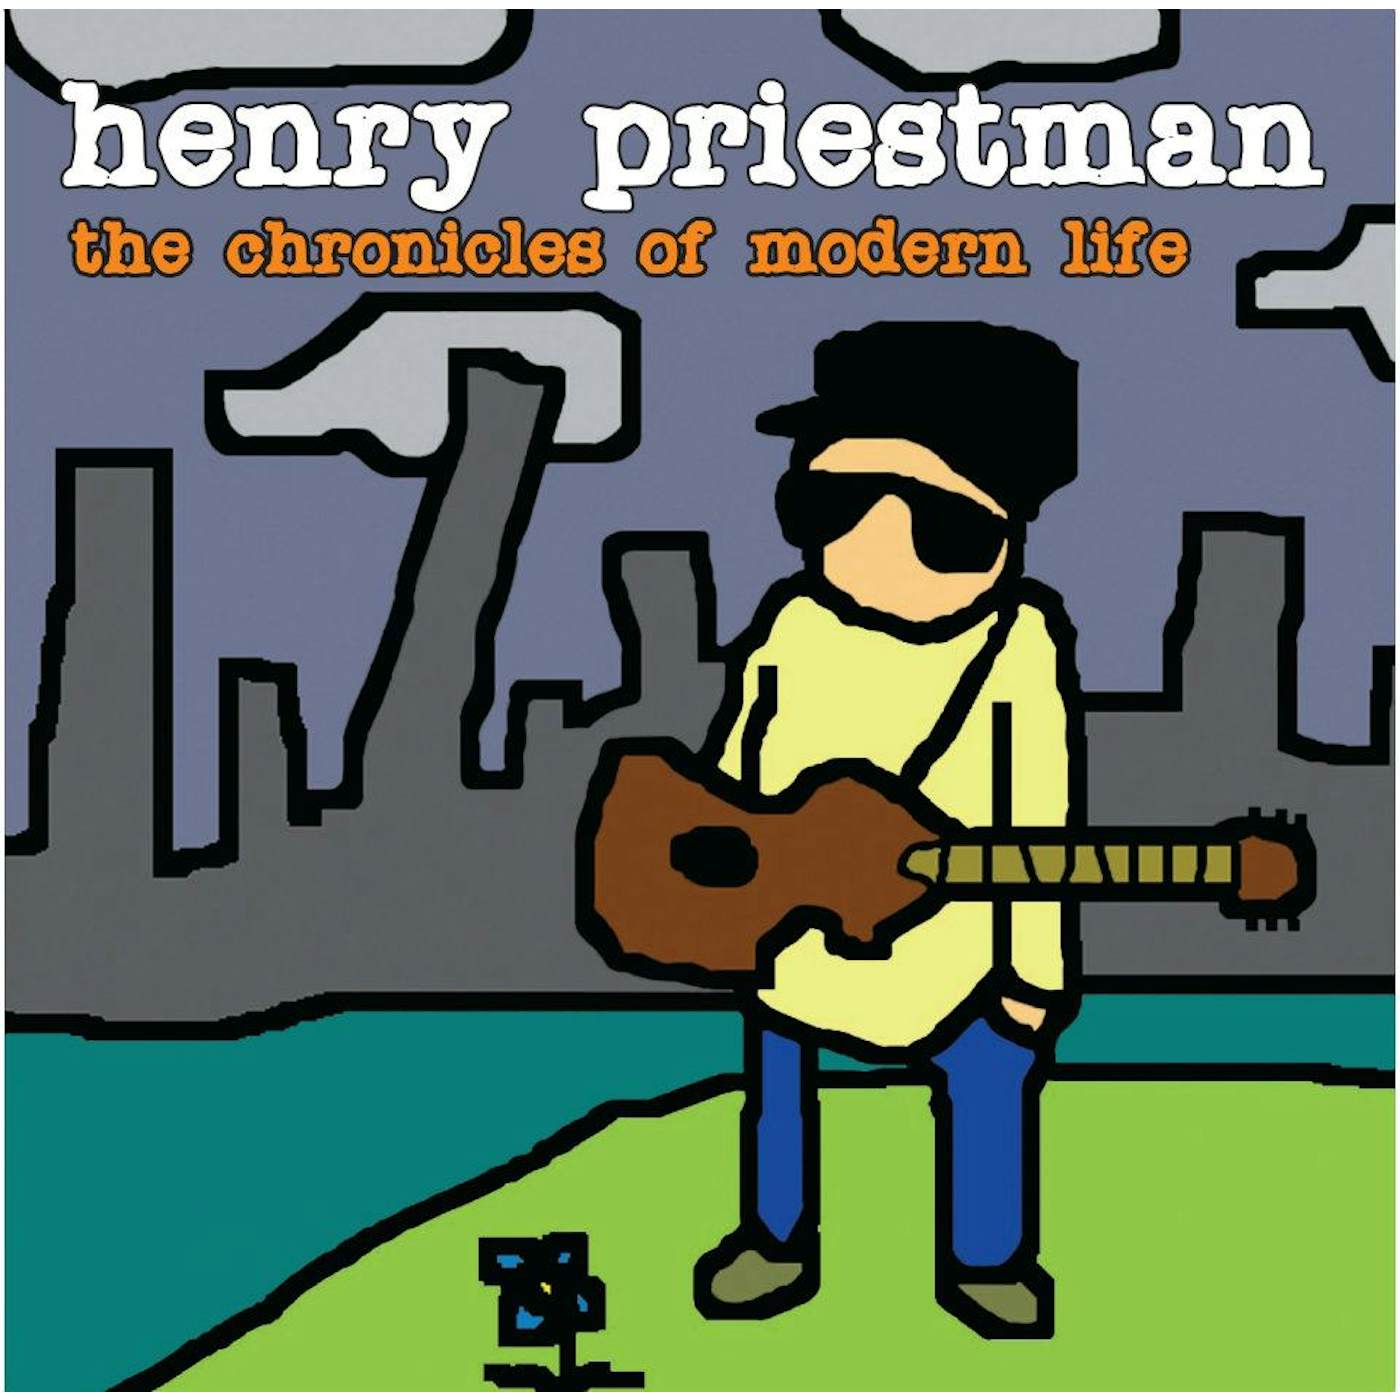 Henry Priestman CHRONICLES OF MODERN LIFE Vinyl Record